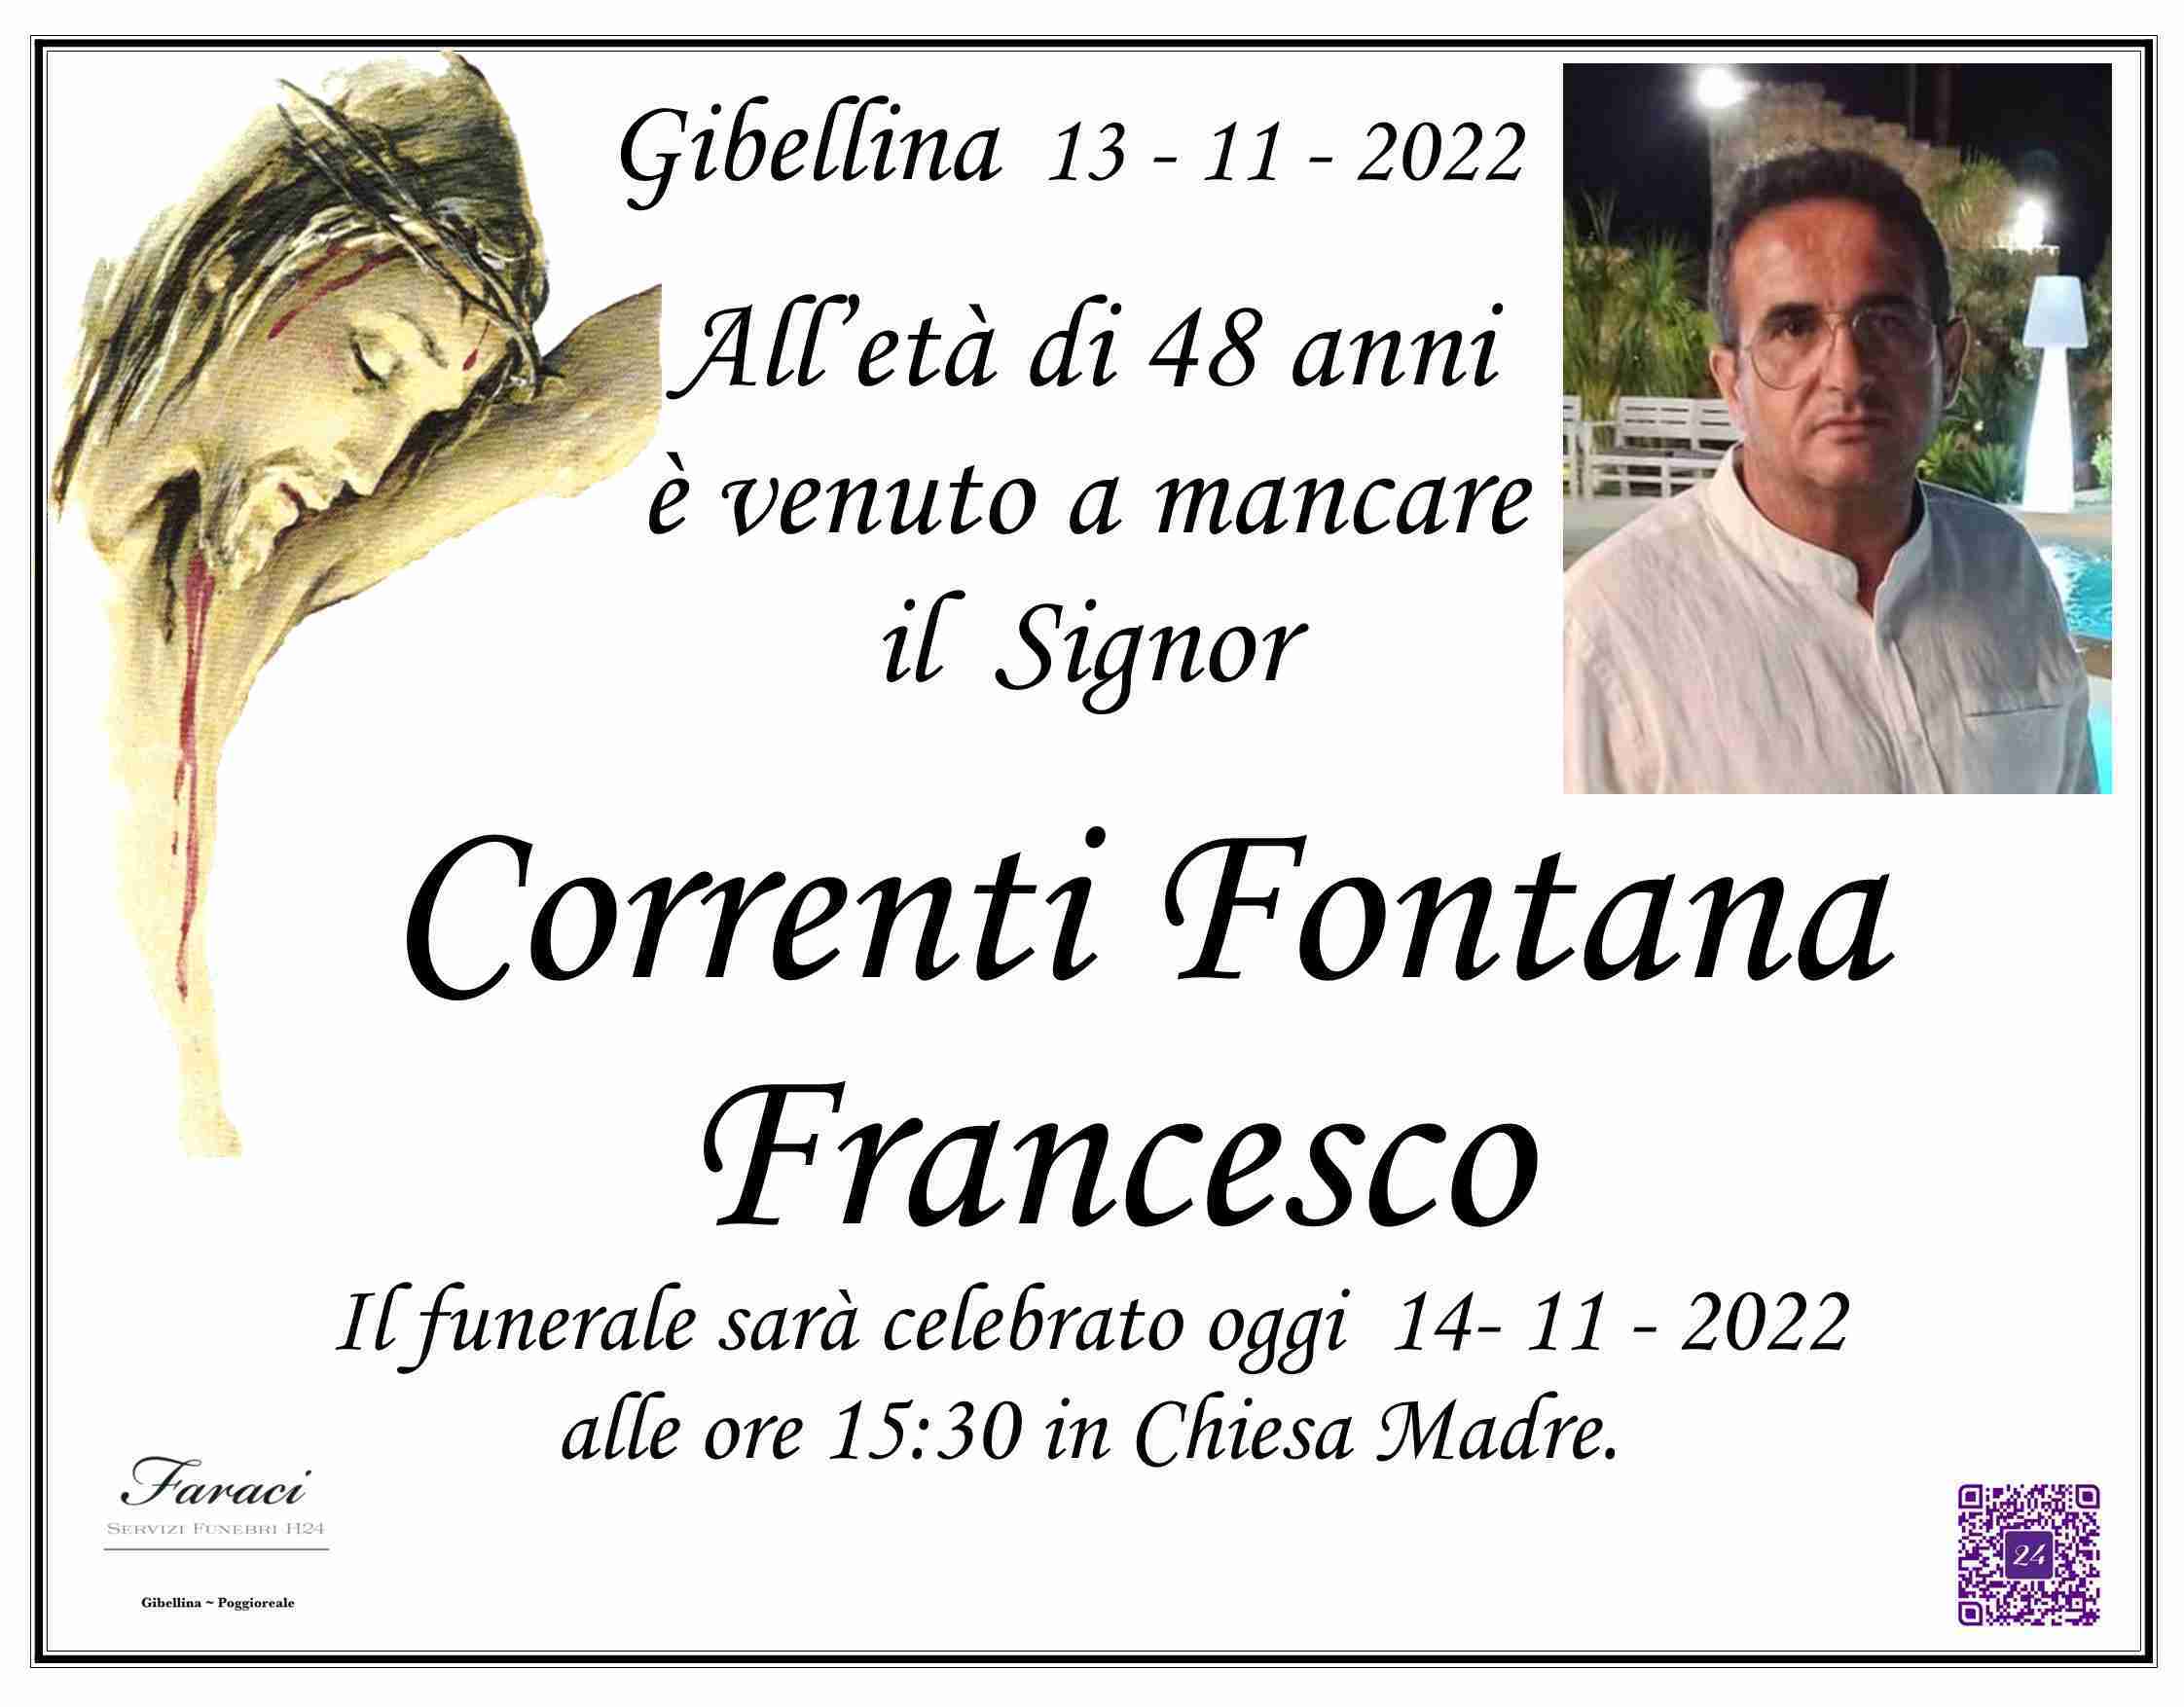 Francesco Correnti Fontana